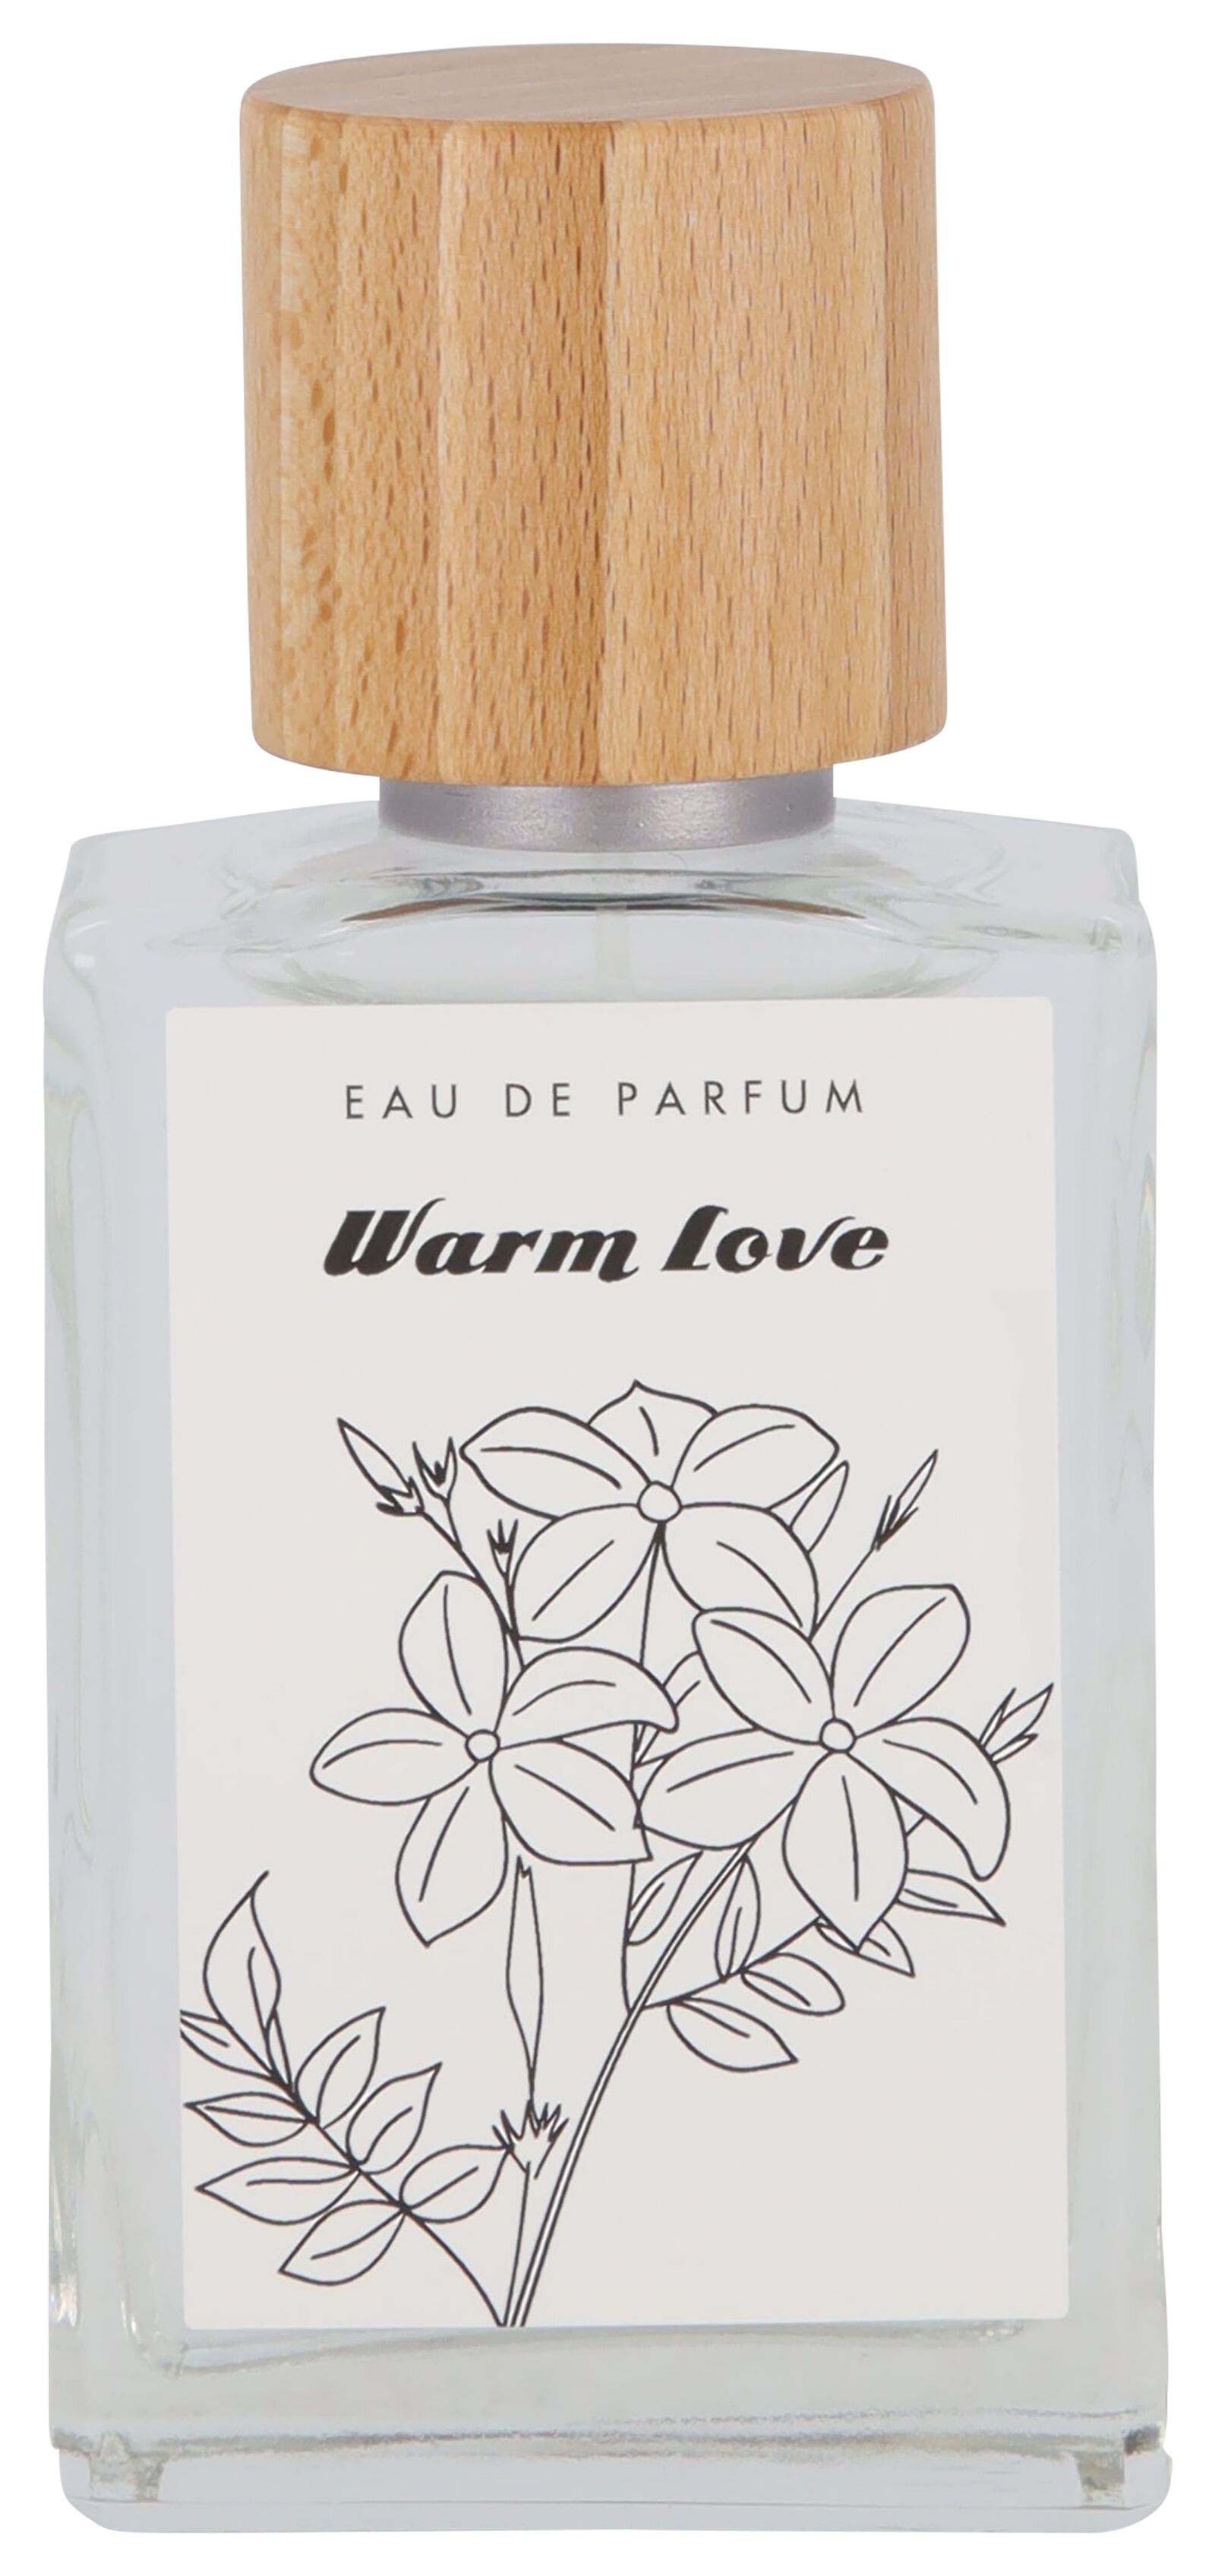 eau de parfum warm love natural 50ml - 11280009 - HEMA